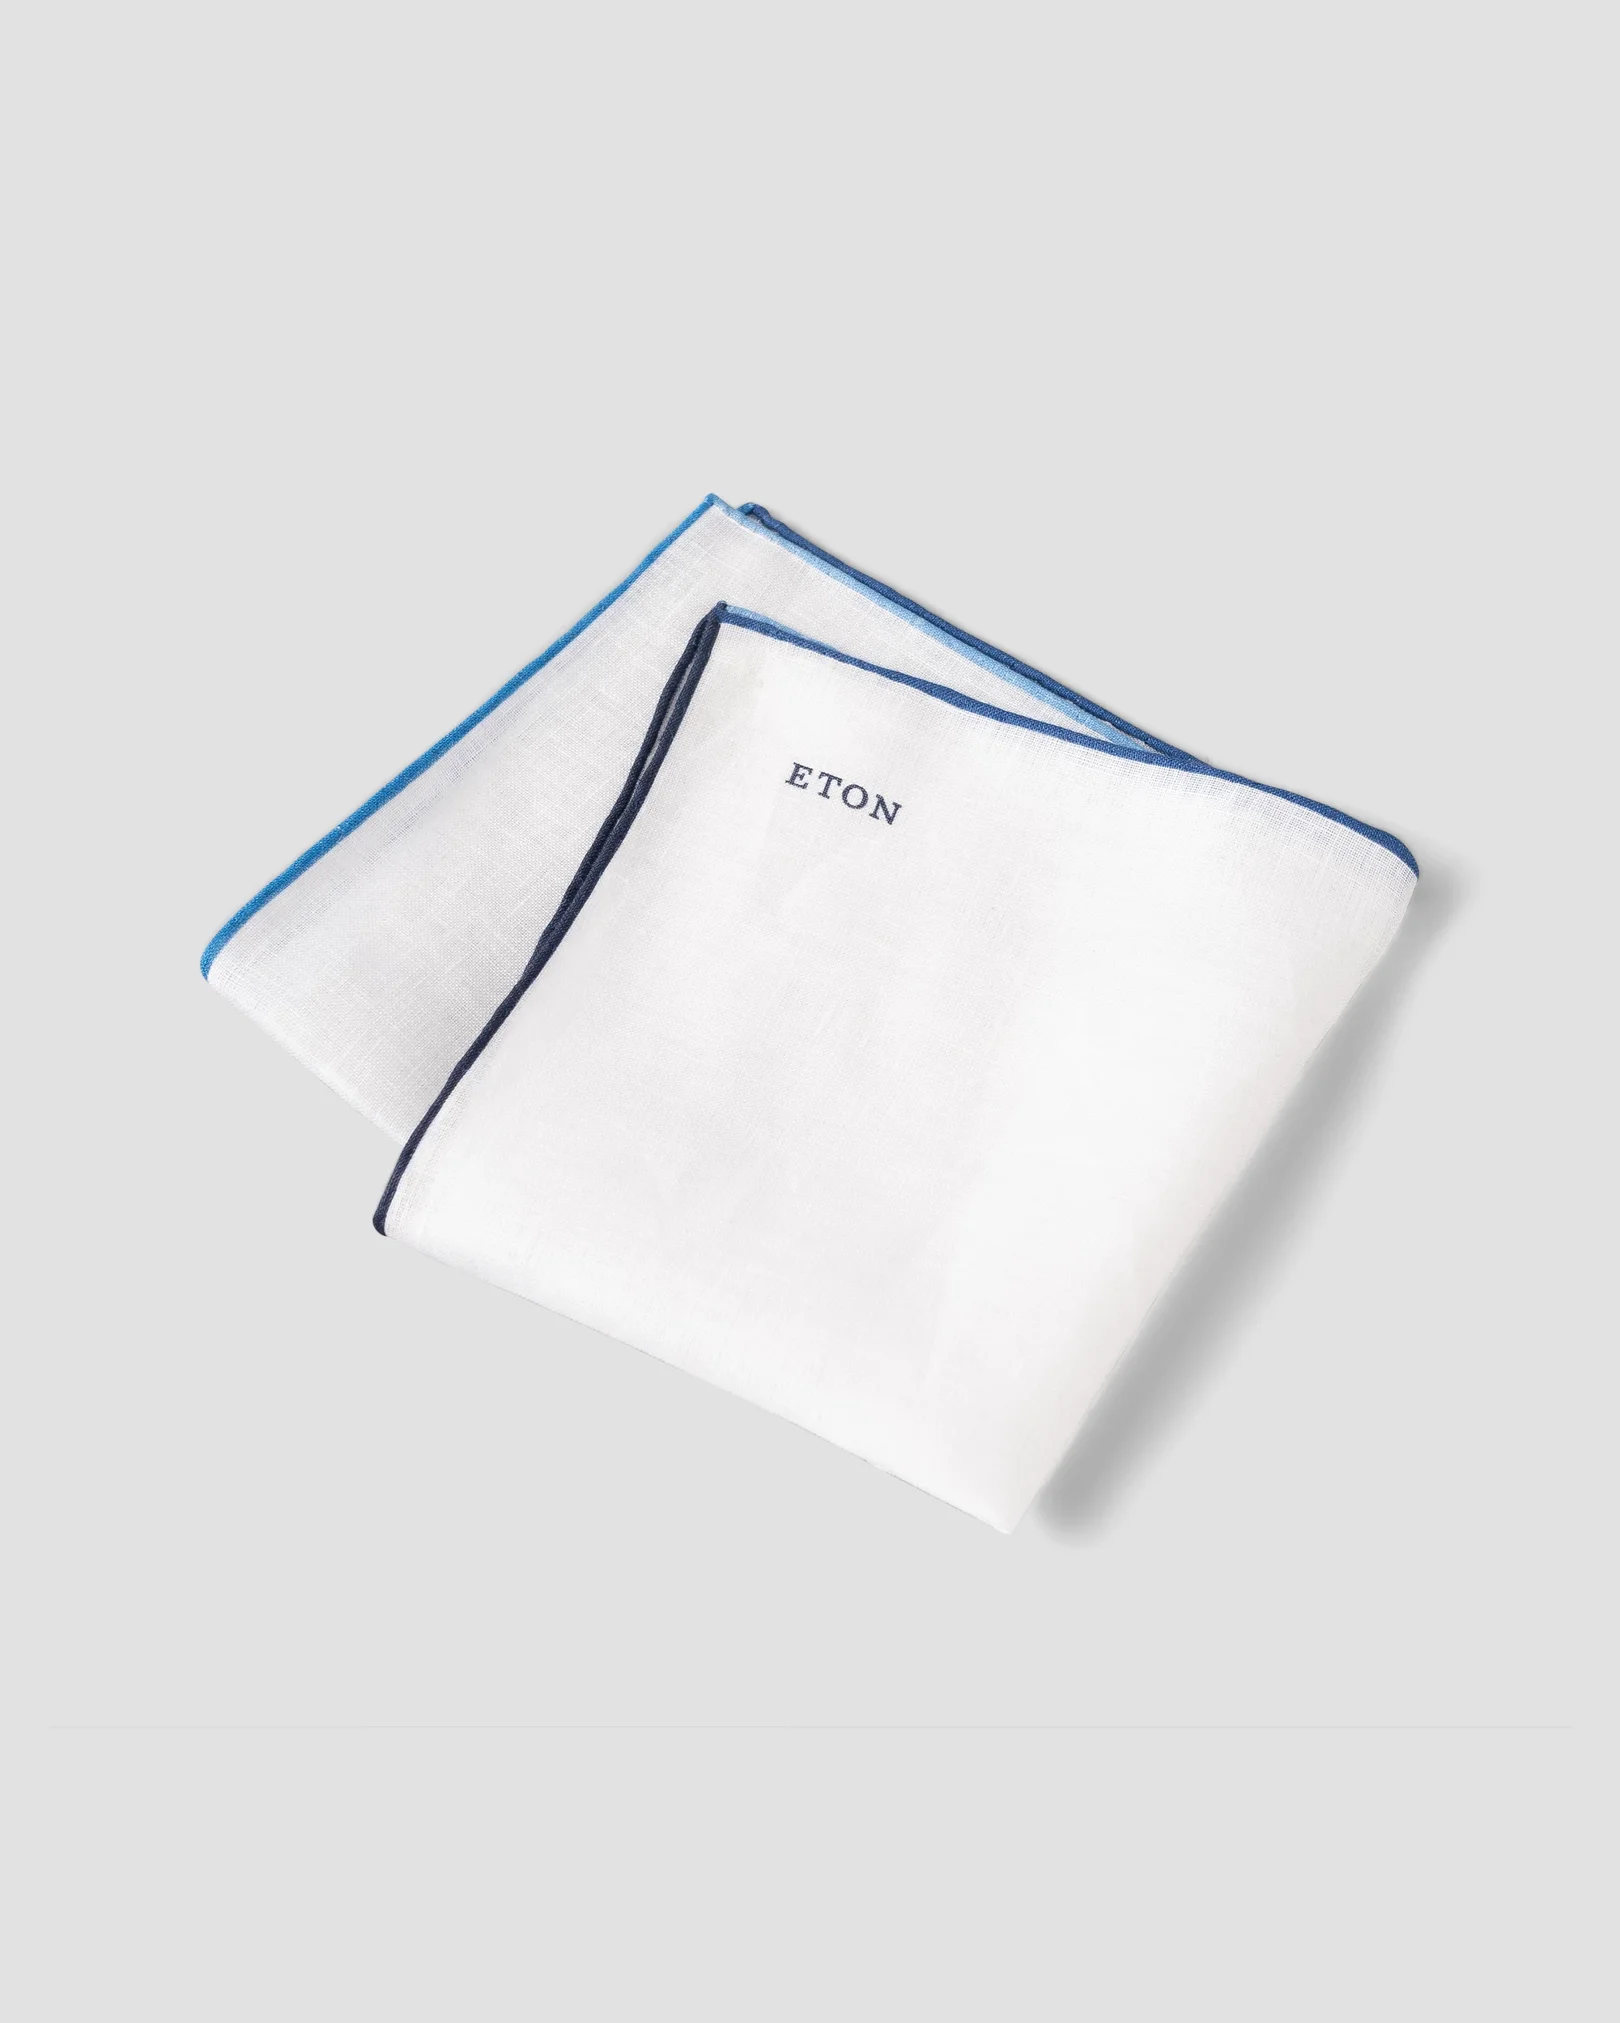 Eton - blue linen pocket square